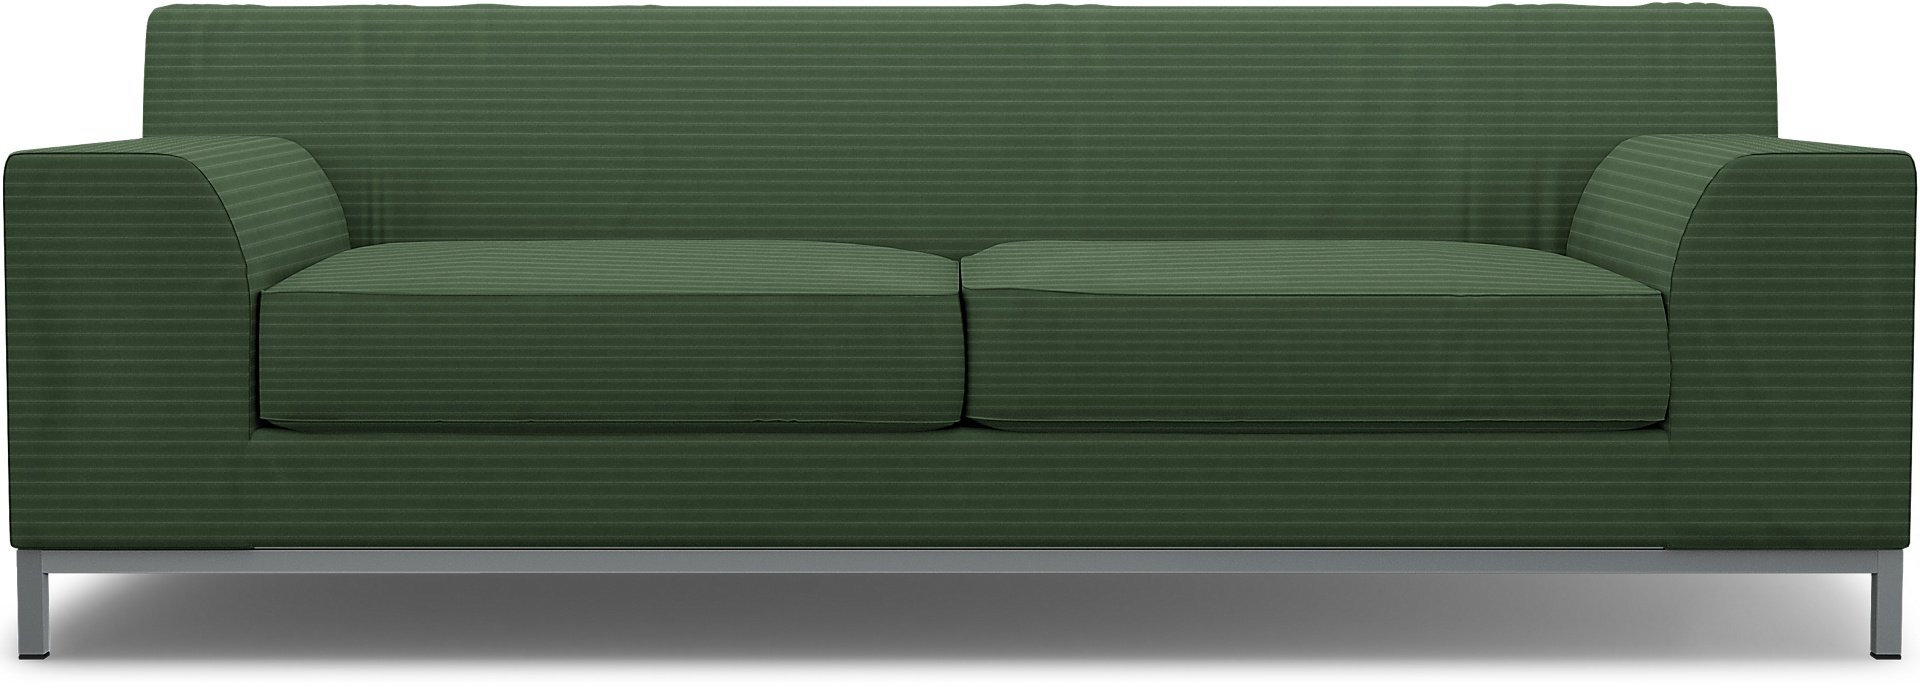 IKEA - Kramfors 3 Seater Sofa Cover, Palm Green, Corduroy - Bemz